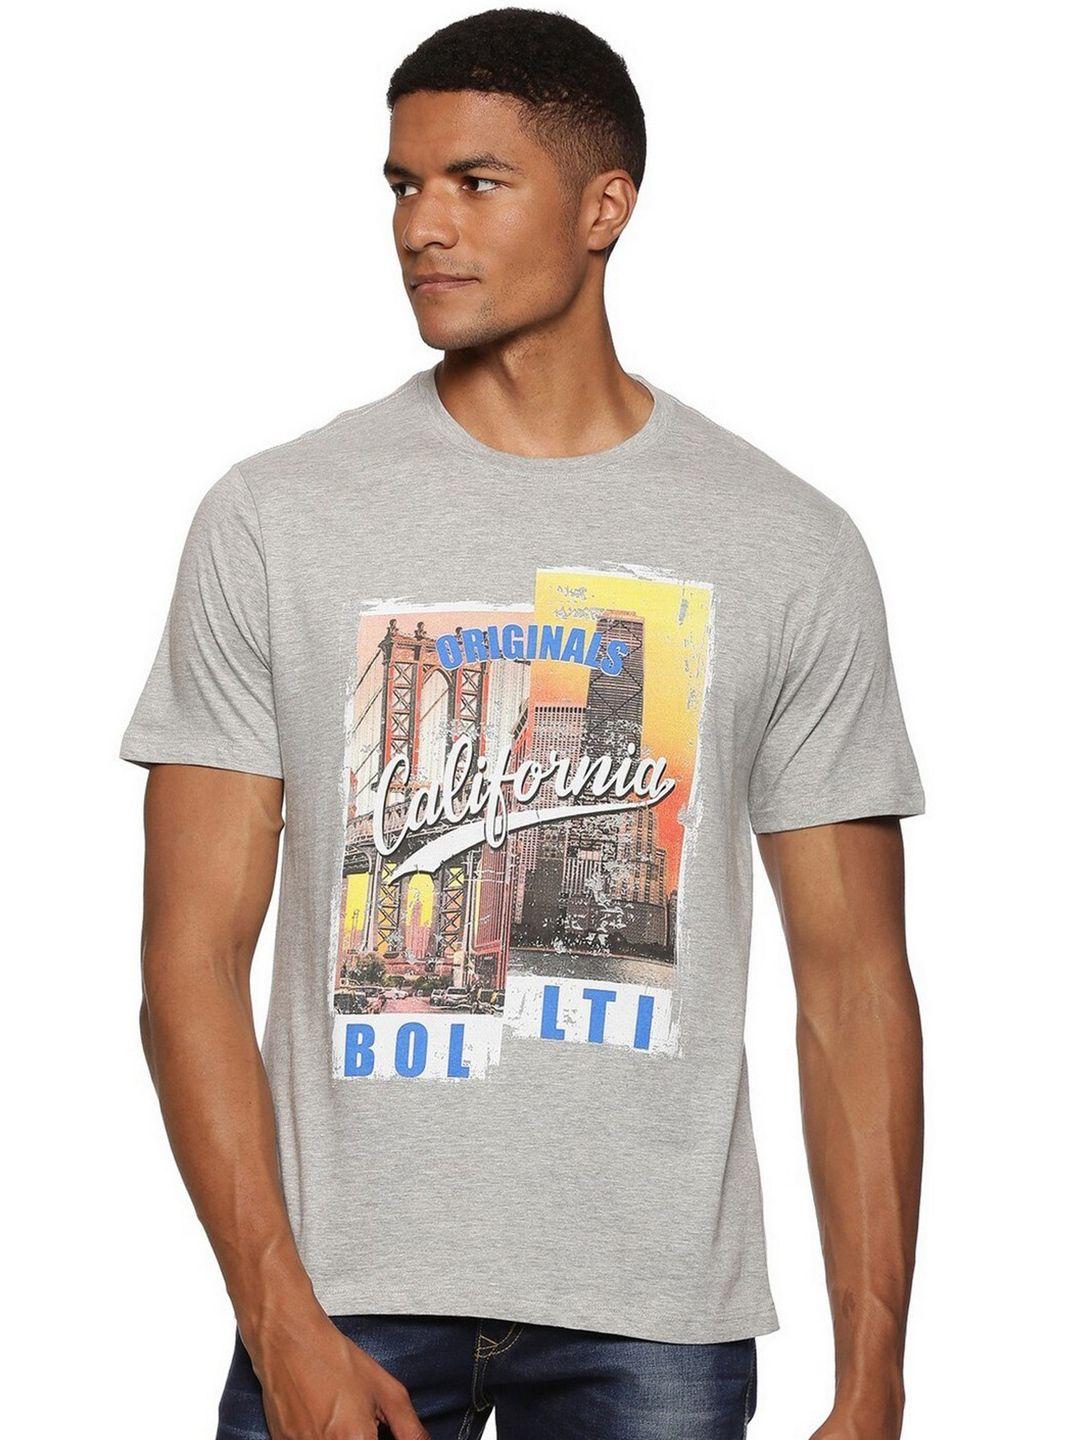 bollti-graphic-printed-cotton-t-shirt